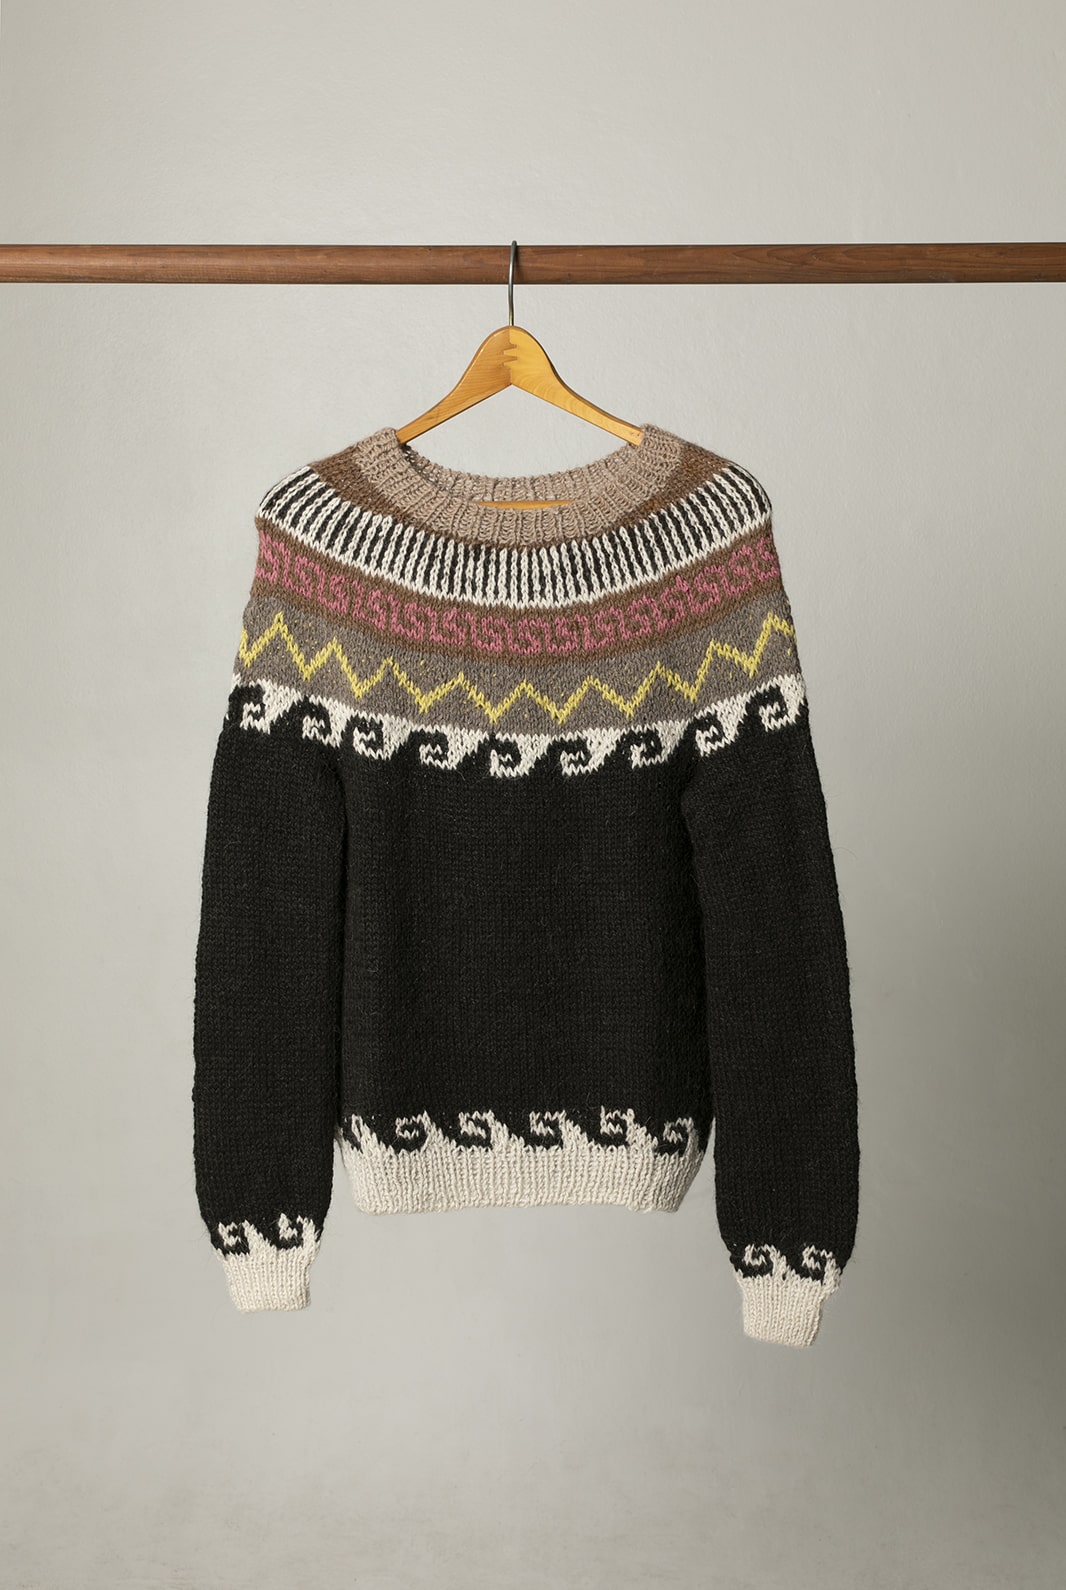 Llama wool sweater with pattern